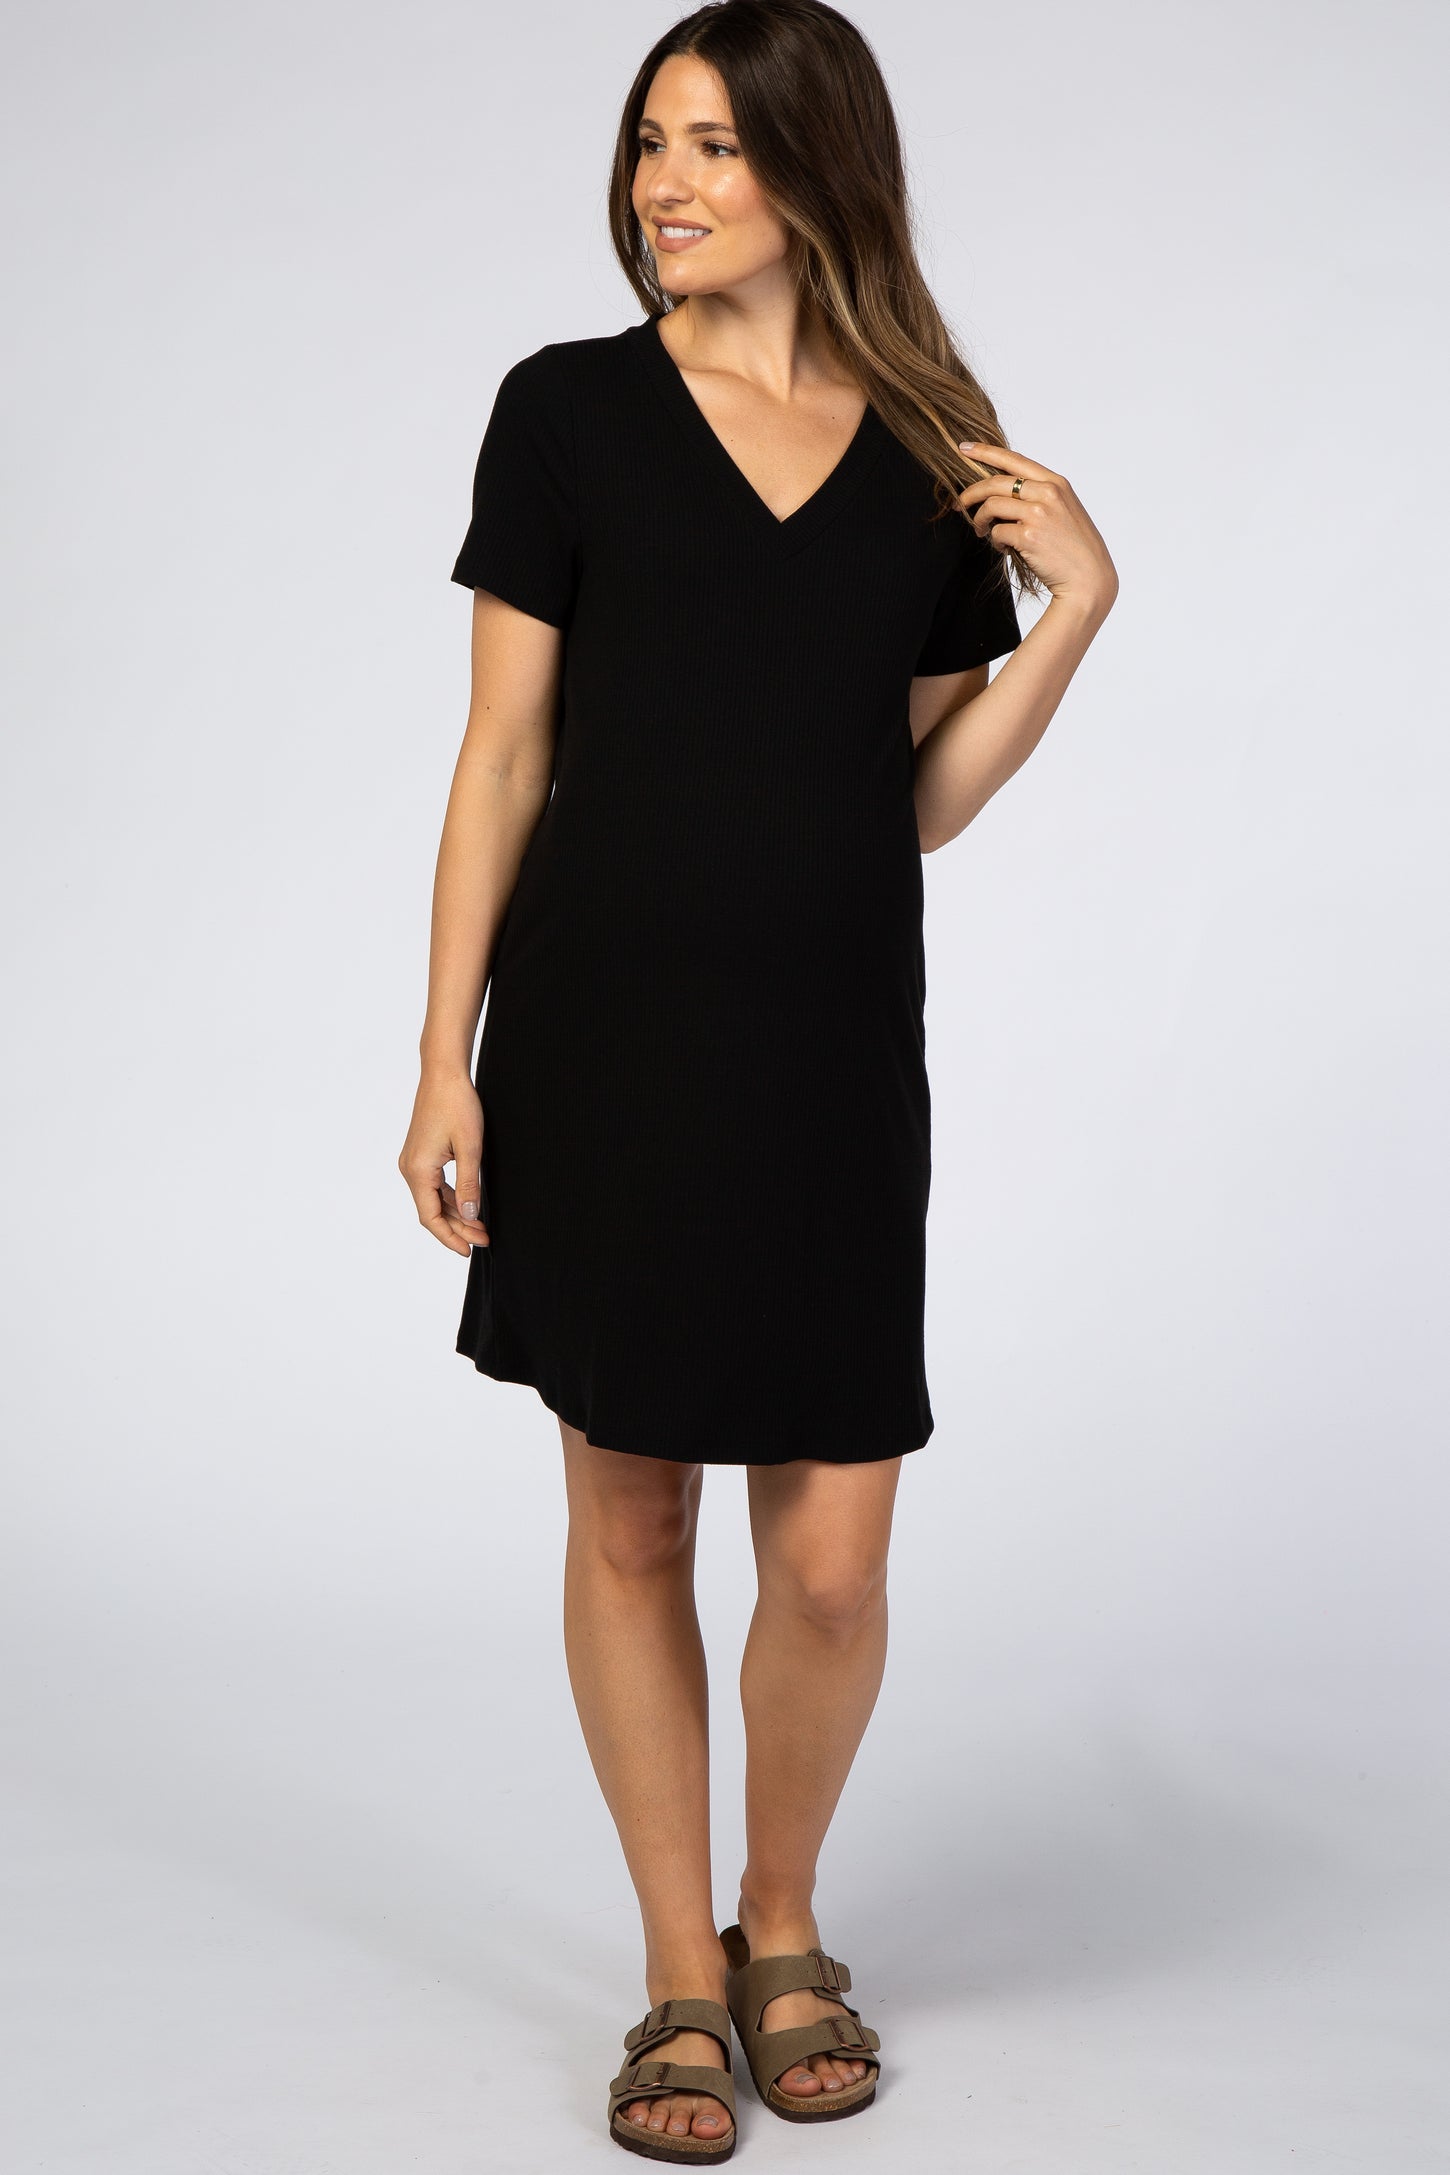 Black Ribbed V-Neck Short Sleeve Maternity Dress